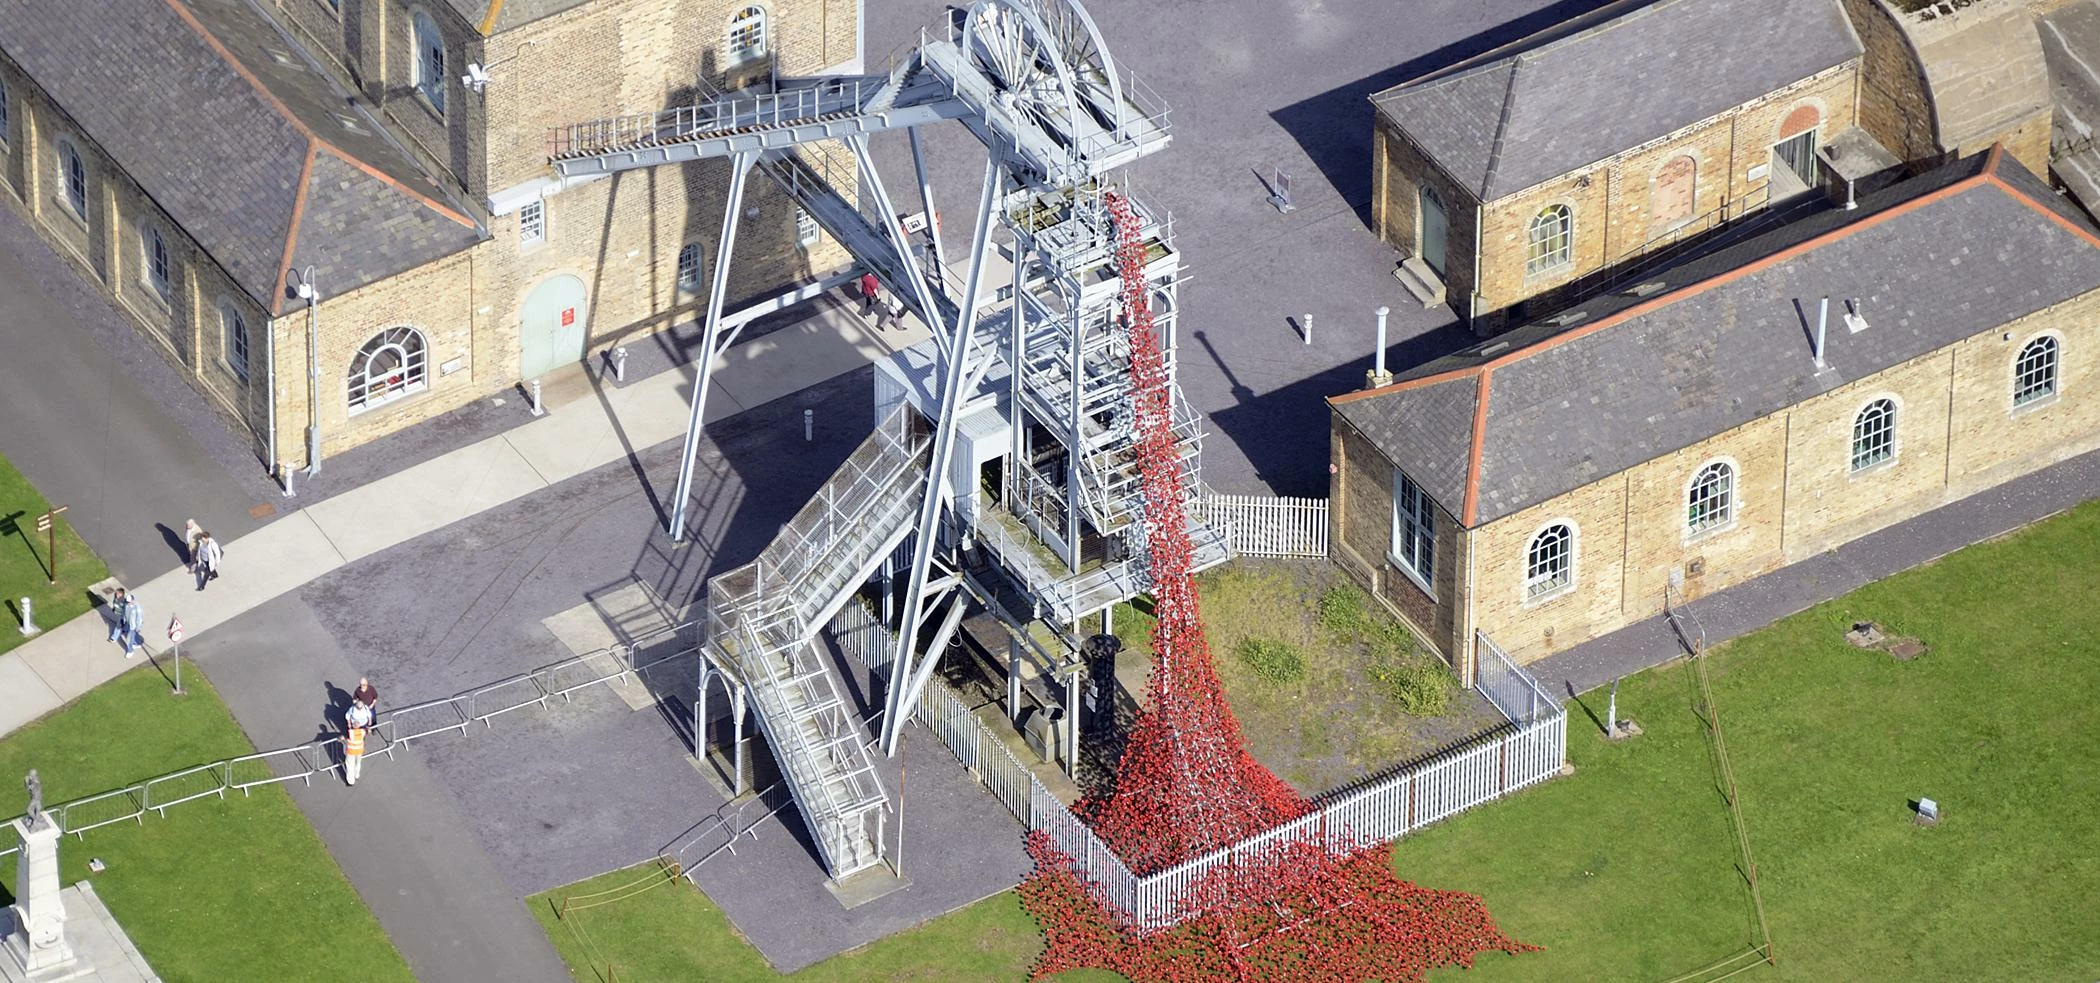 Airfotos.co.uk stunning aerial image of the amazing Weeping Window at Woodhorn Museum, Ashington